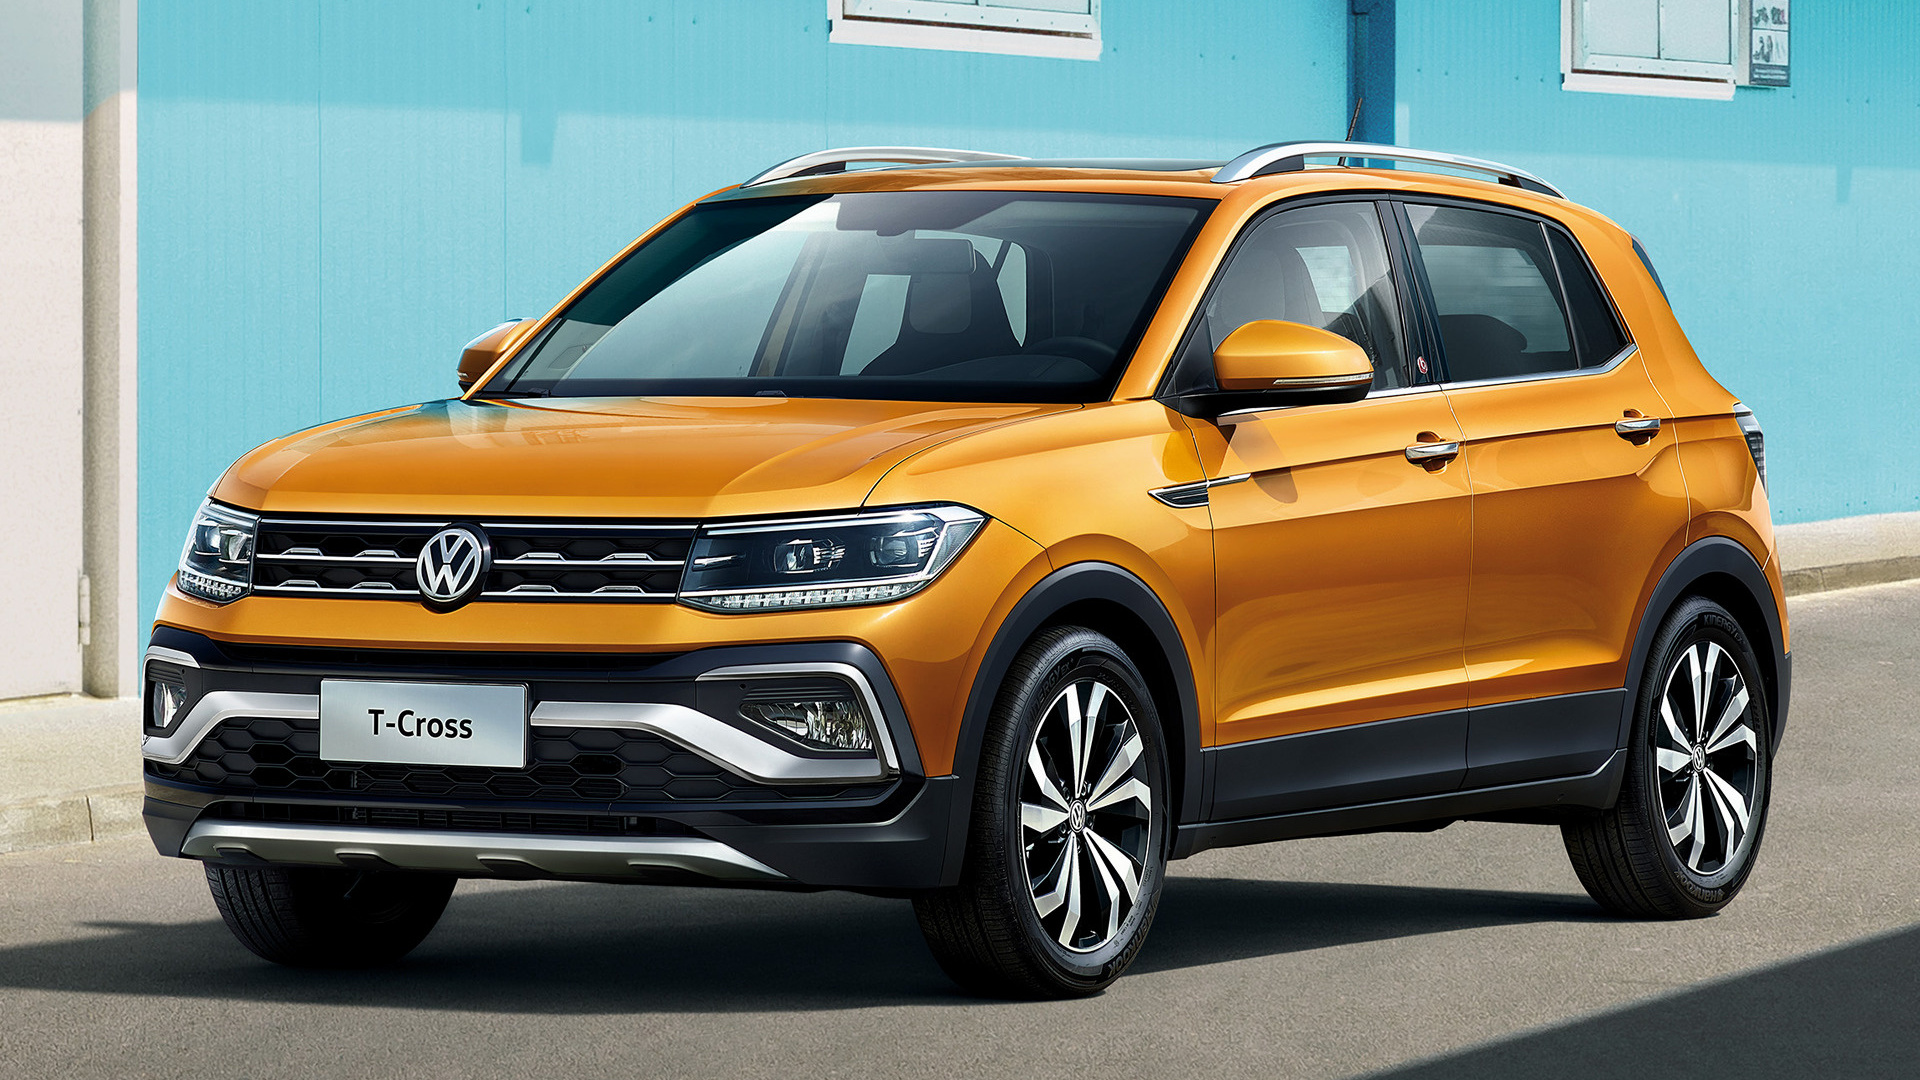 2019 Volkswagen T-Cross (CN) - Wallpapers and HD Images ...